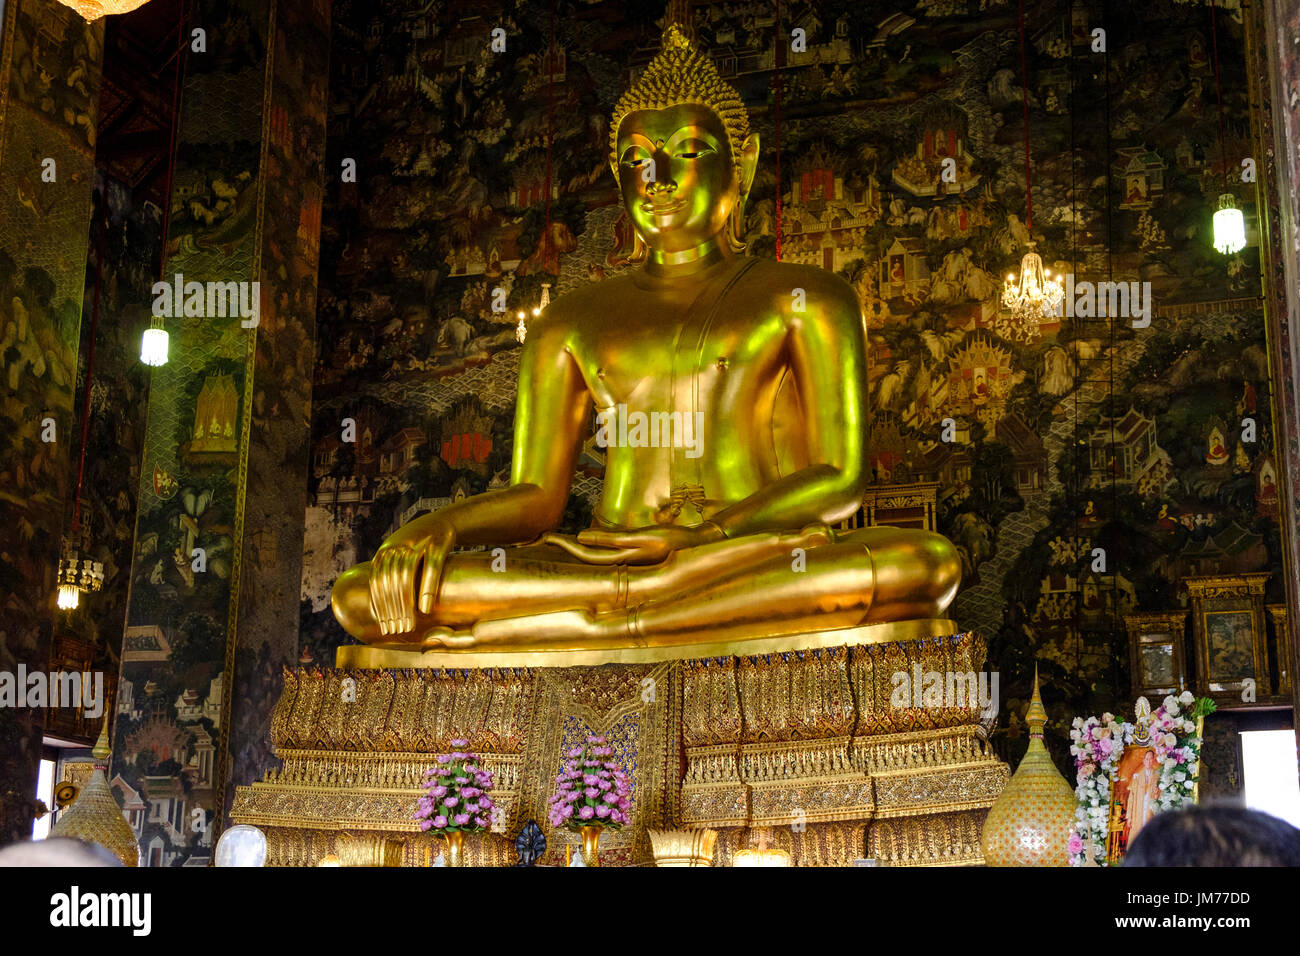 Sitting golden Buddha statue on main altar at Wat Suthat Thepwararam, a Buddhist temple in Bangkok, Thailand. Stock Photo